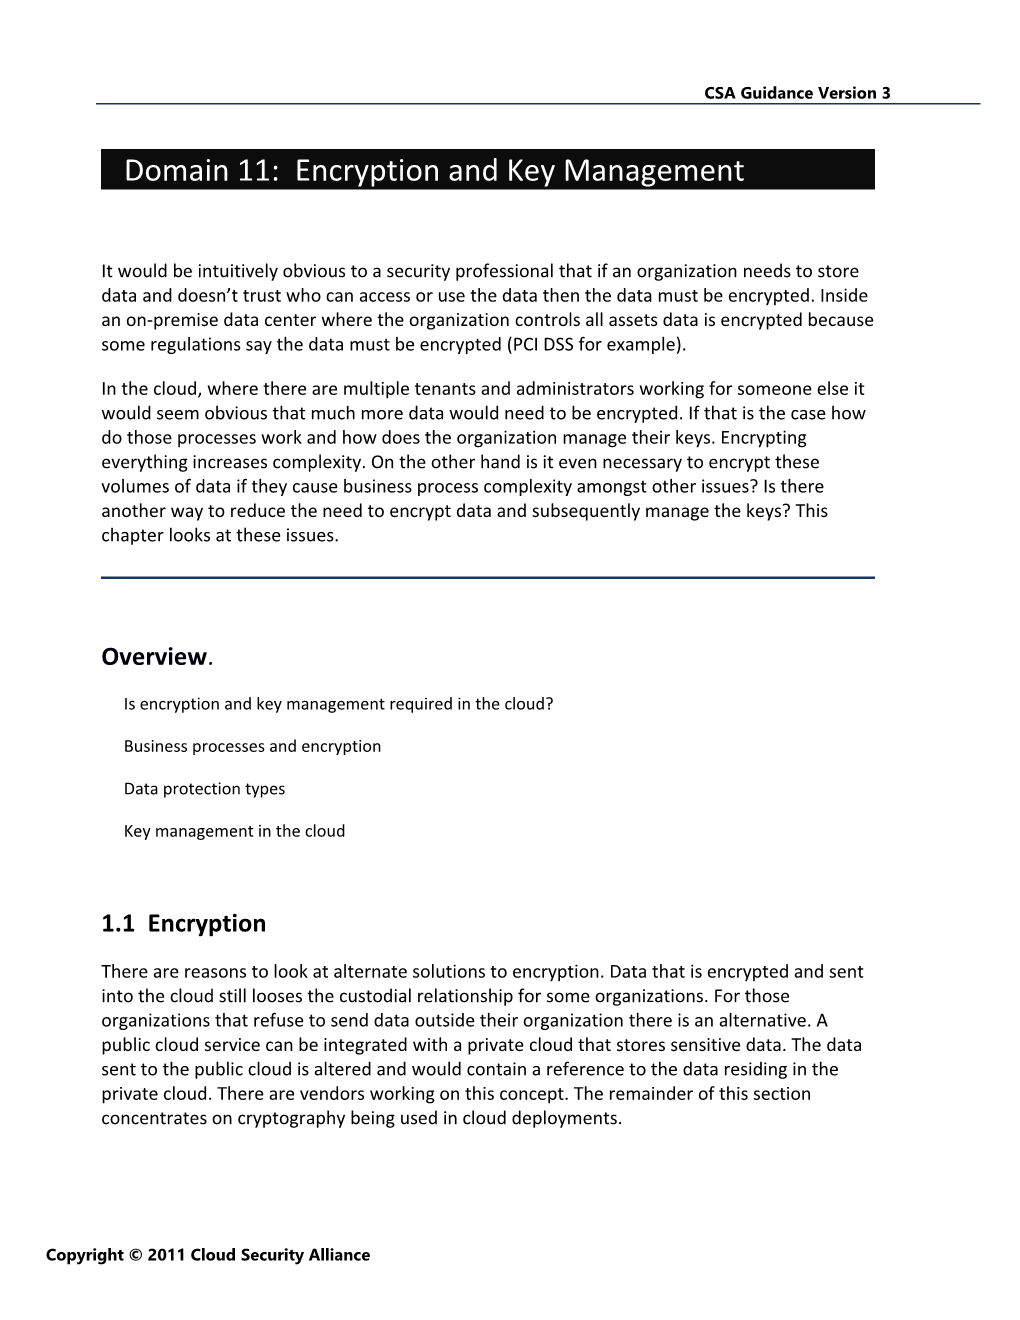 Domain 11: Encryption and Key Management